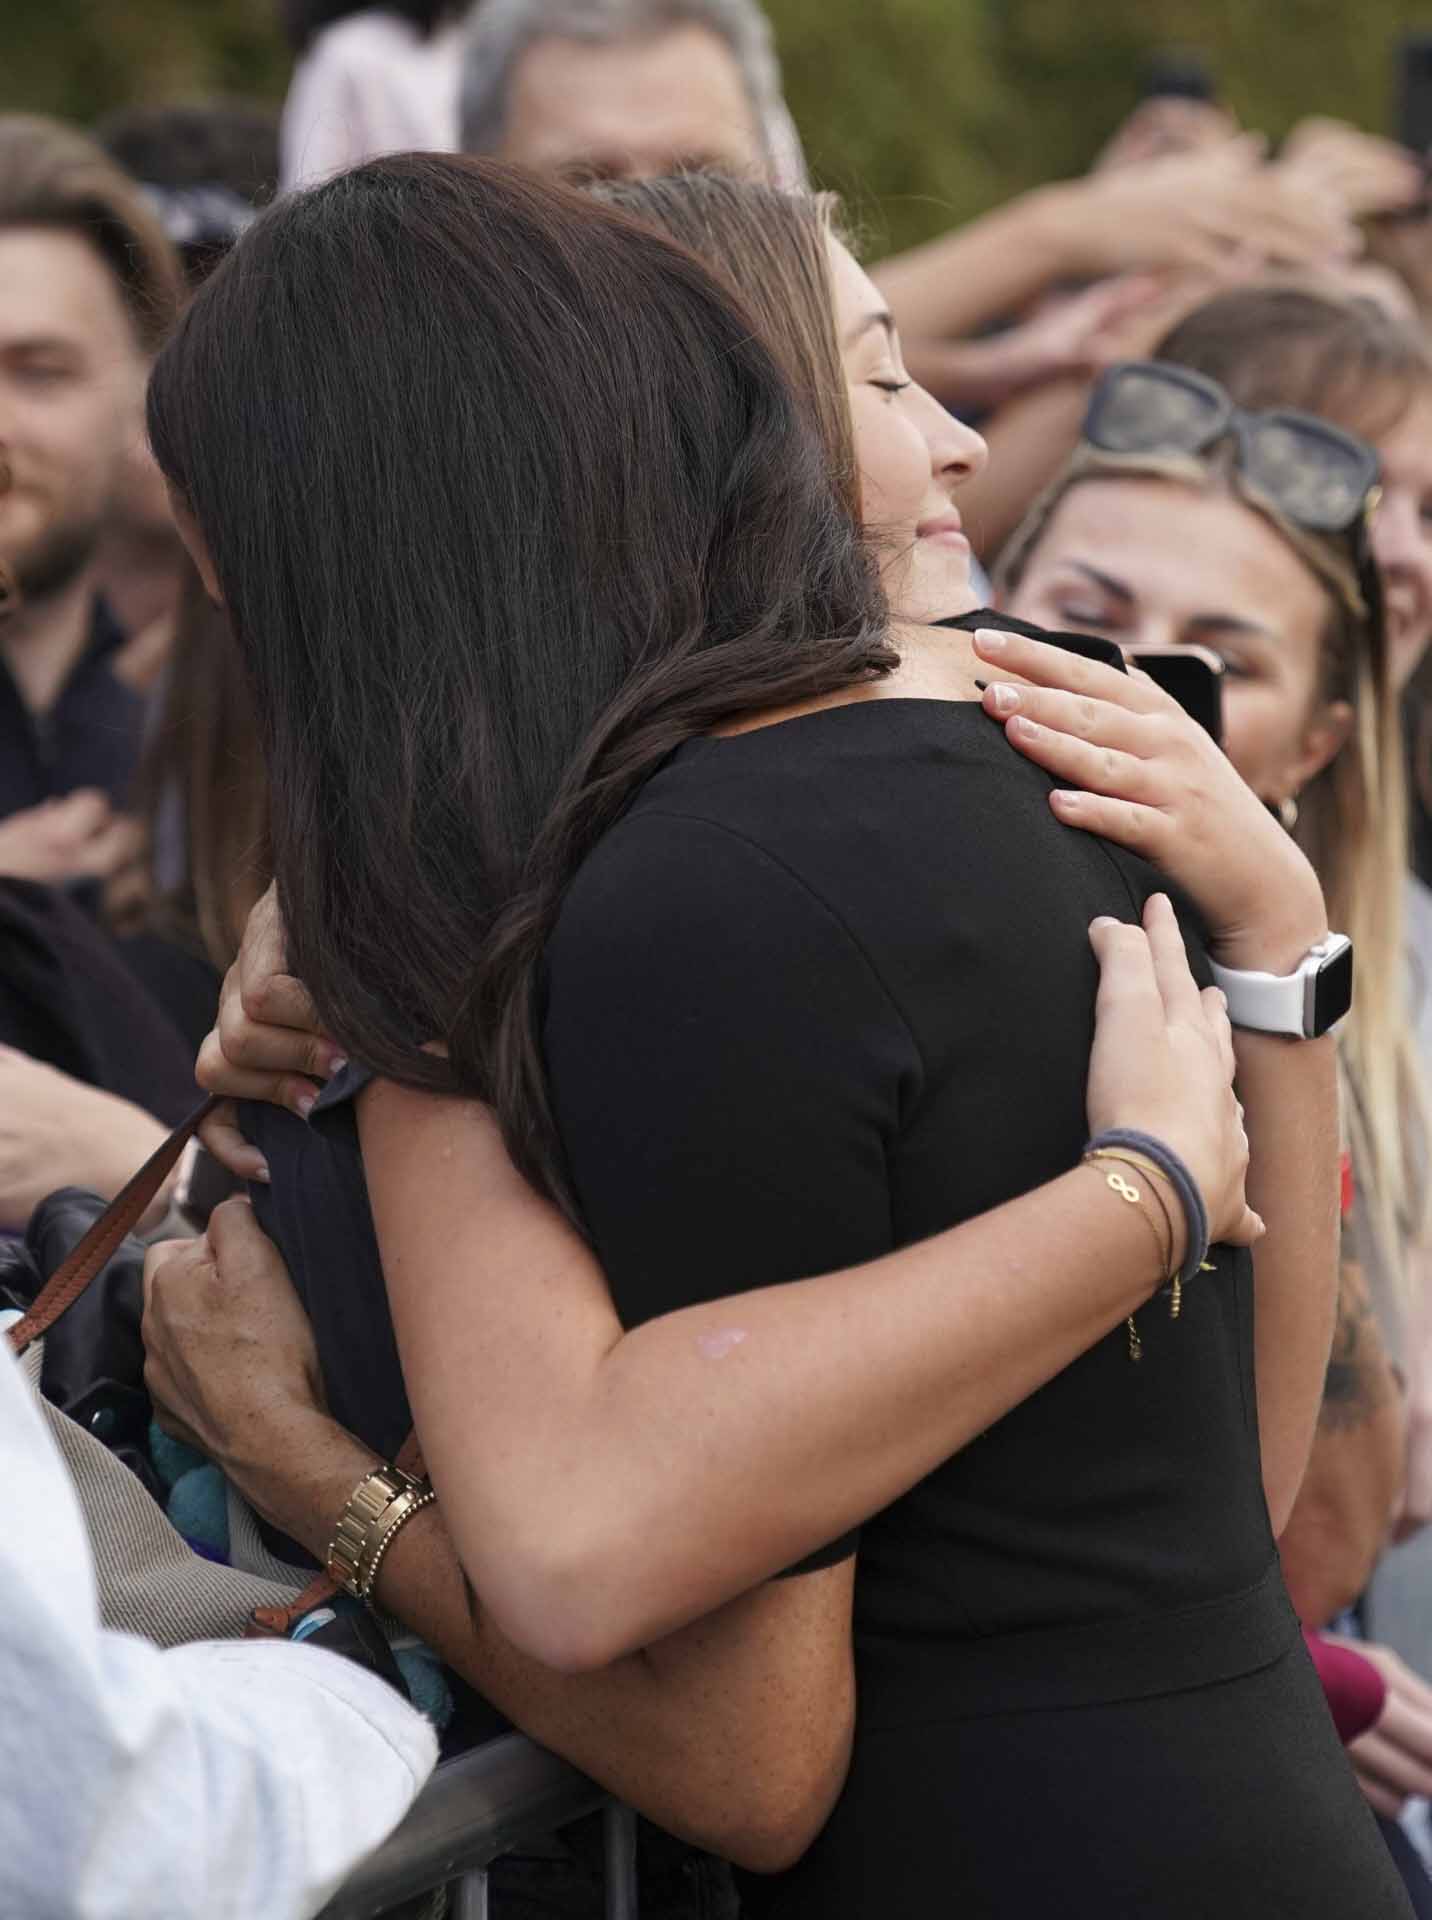 El abrazo de Meghan Markle a una joven en Windsor que se ha hecho viral